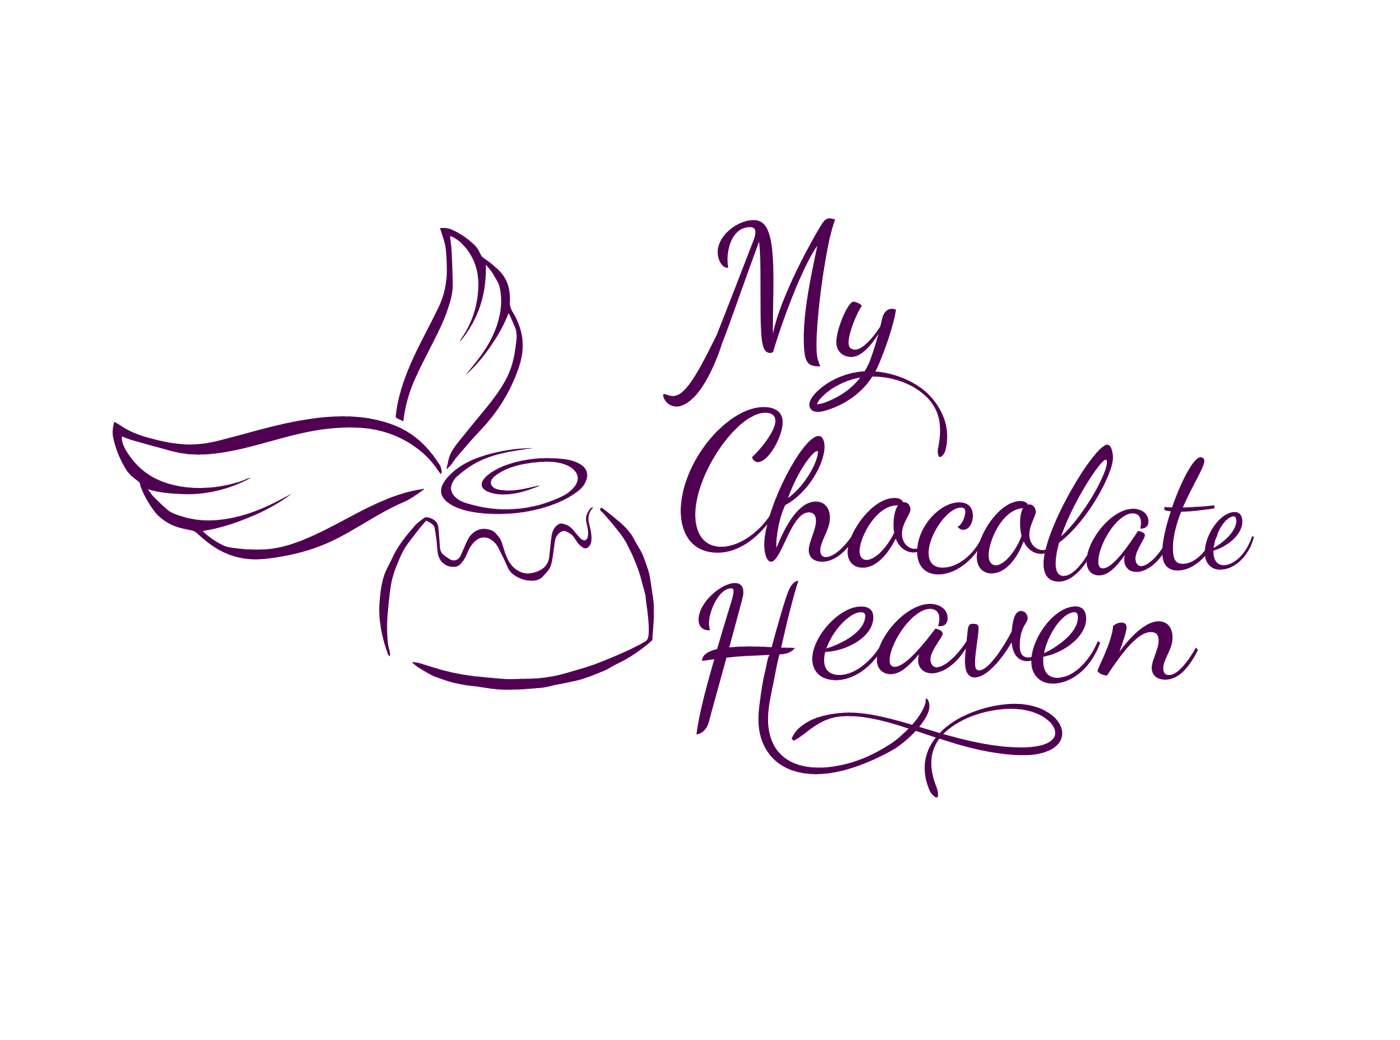 My Chocolate Heaven mch